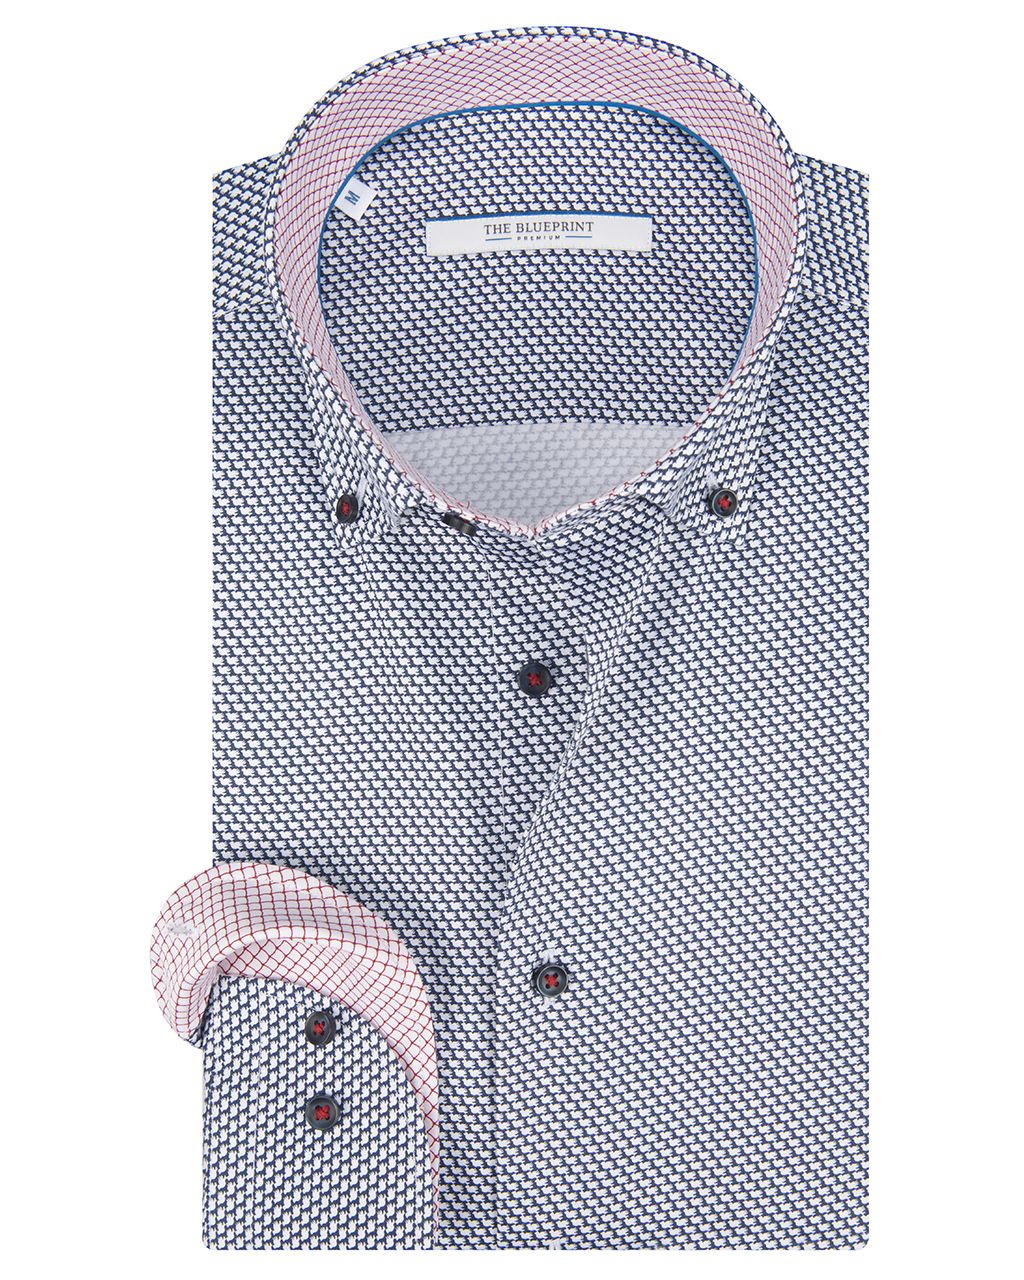 The BLUEPRINT Premium Trendy overhemd LM Donkerblauw print 061873-001-L